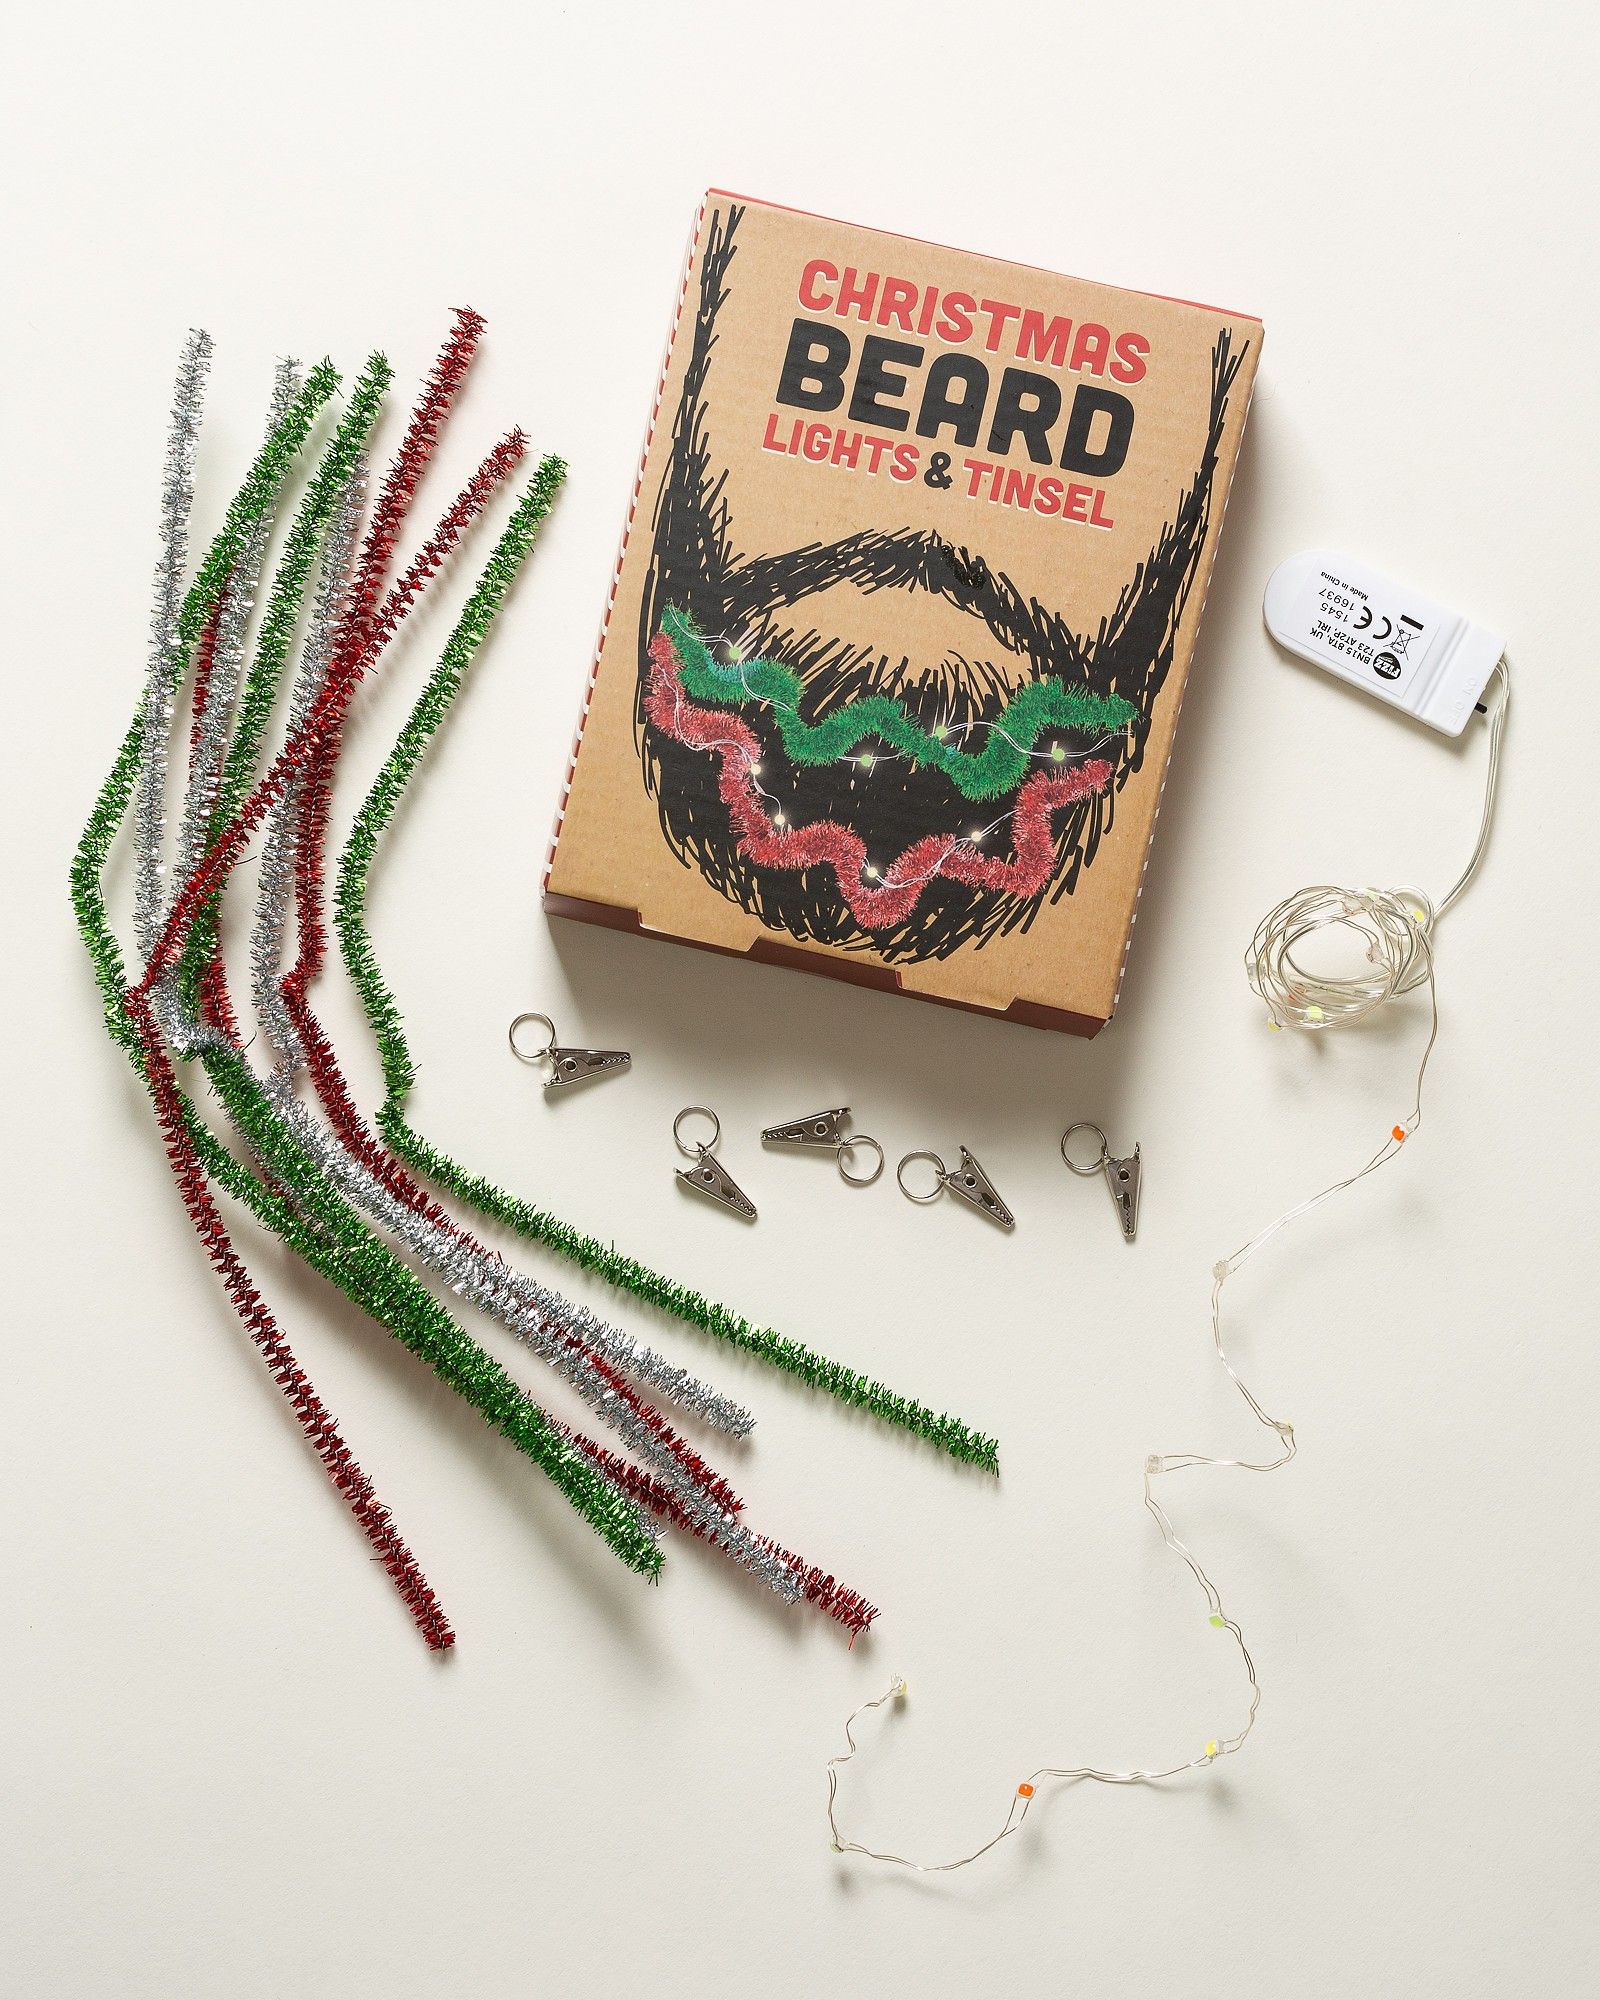 Secret Santa Gifts - Christmas Beard Lights And Tinsel